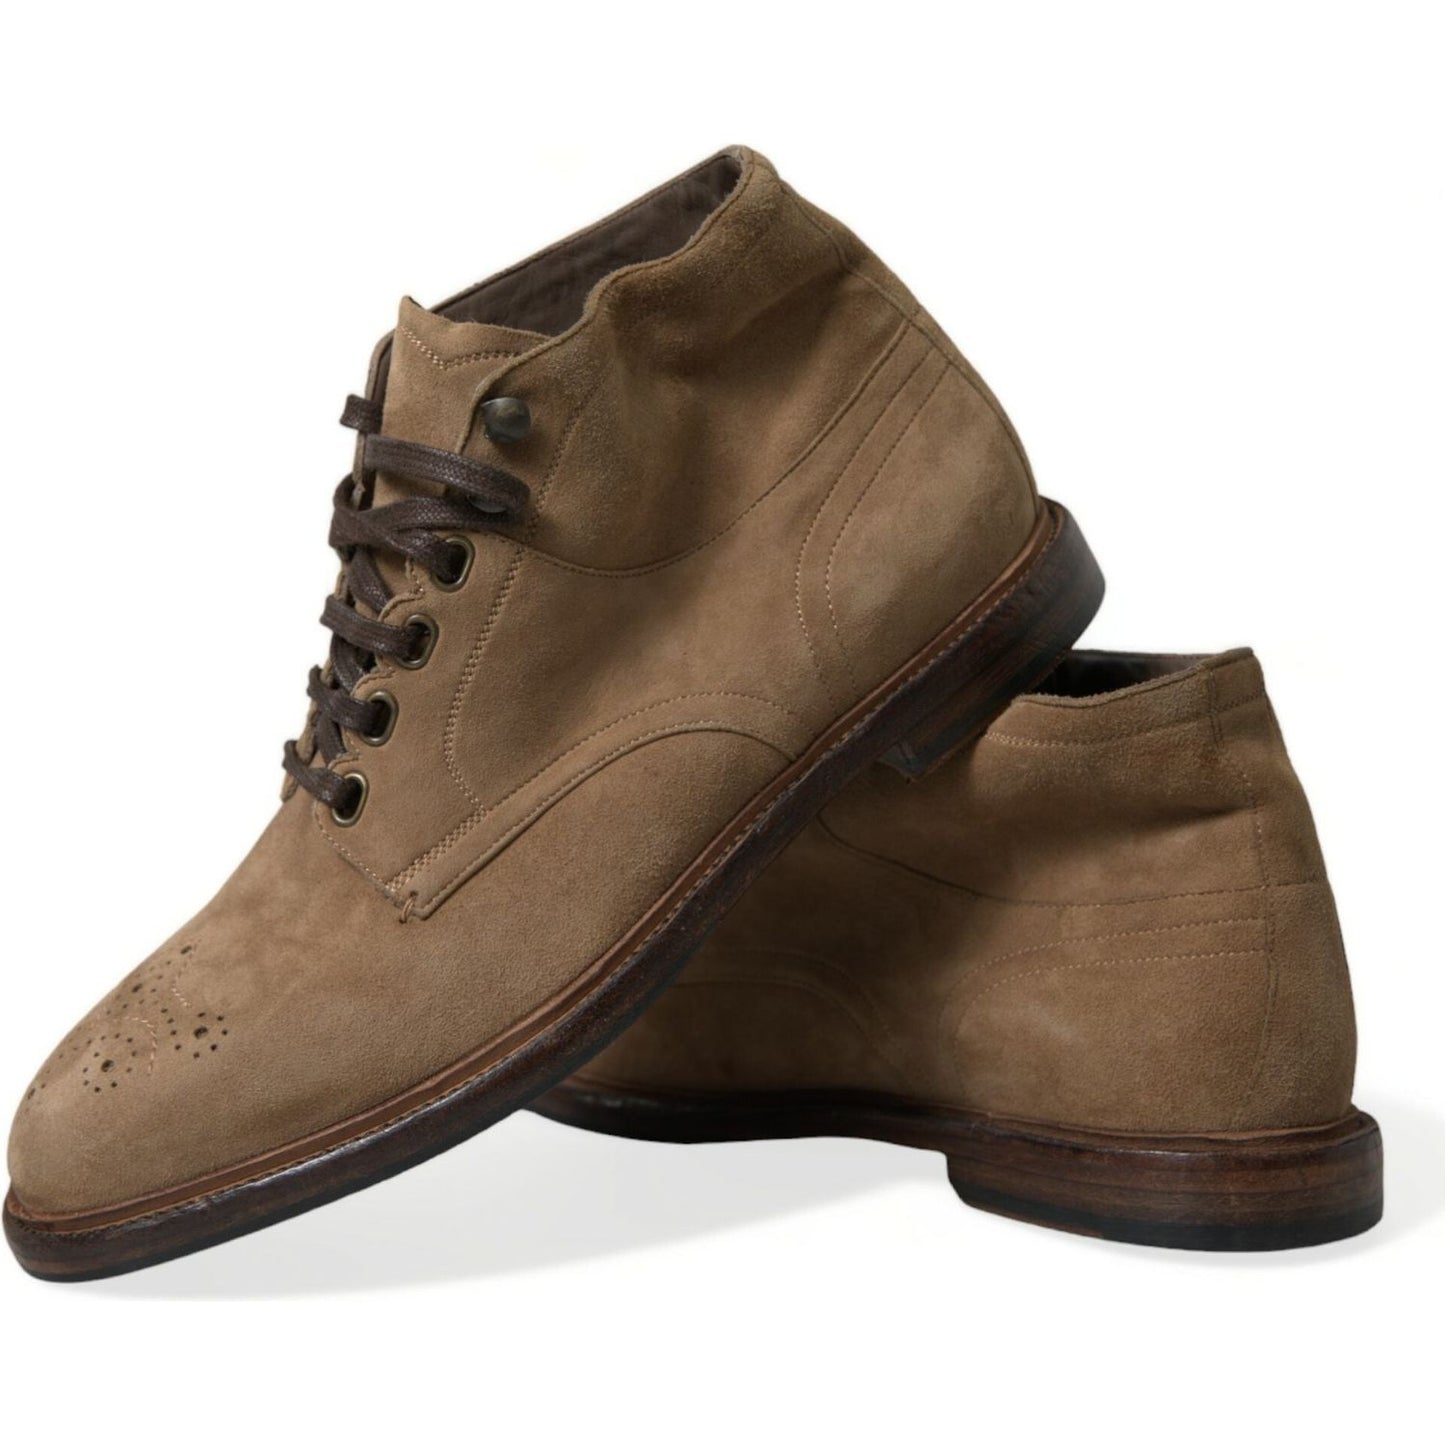 Dolce & Gabbana Elegant Leather Ankle Lace-Up Boots brown-leather-lace-up-ankle-boots-shoes